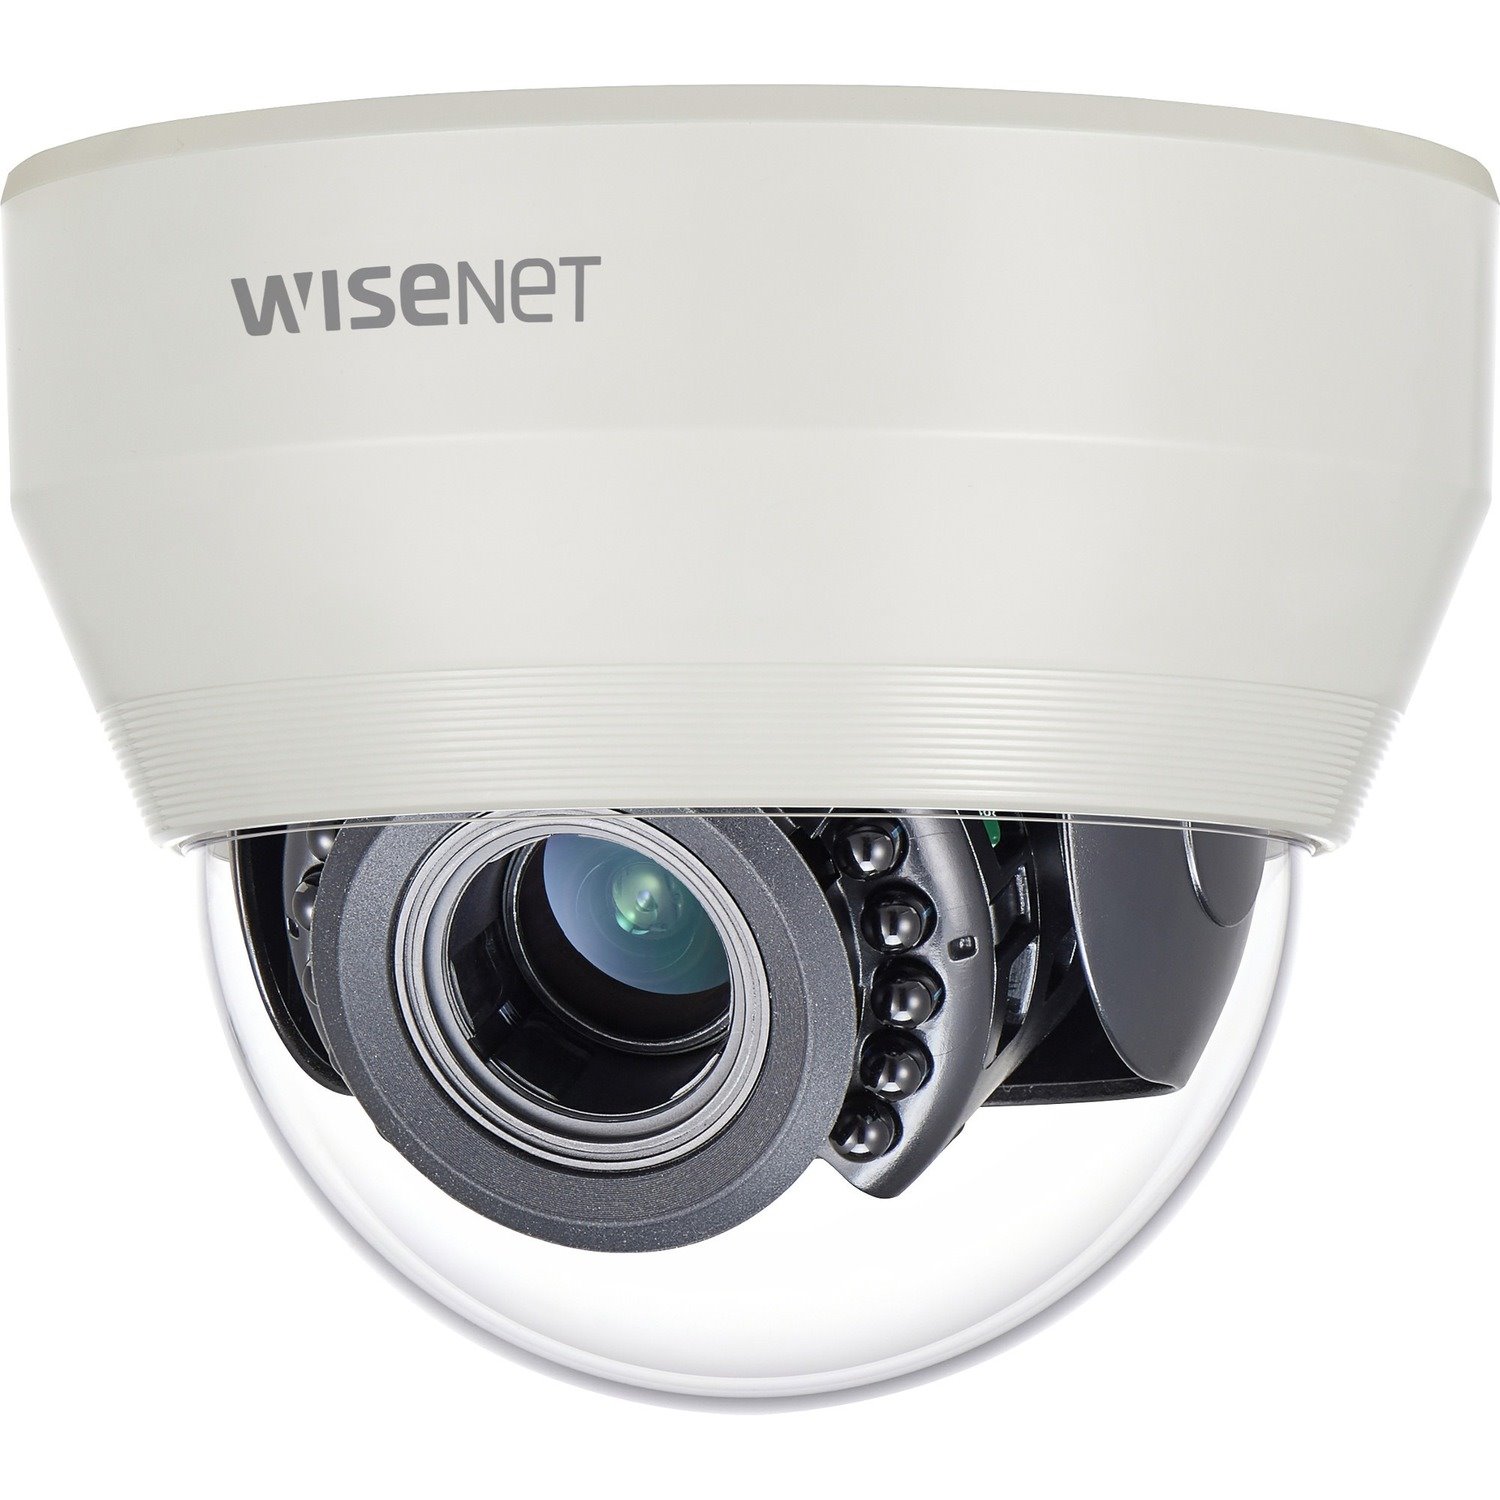 Wisenet HCD-6080R 2 Megapixel Indoor/Outdoor Full HD Surveillance Camera - Color - Dome - Ivory